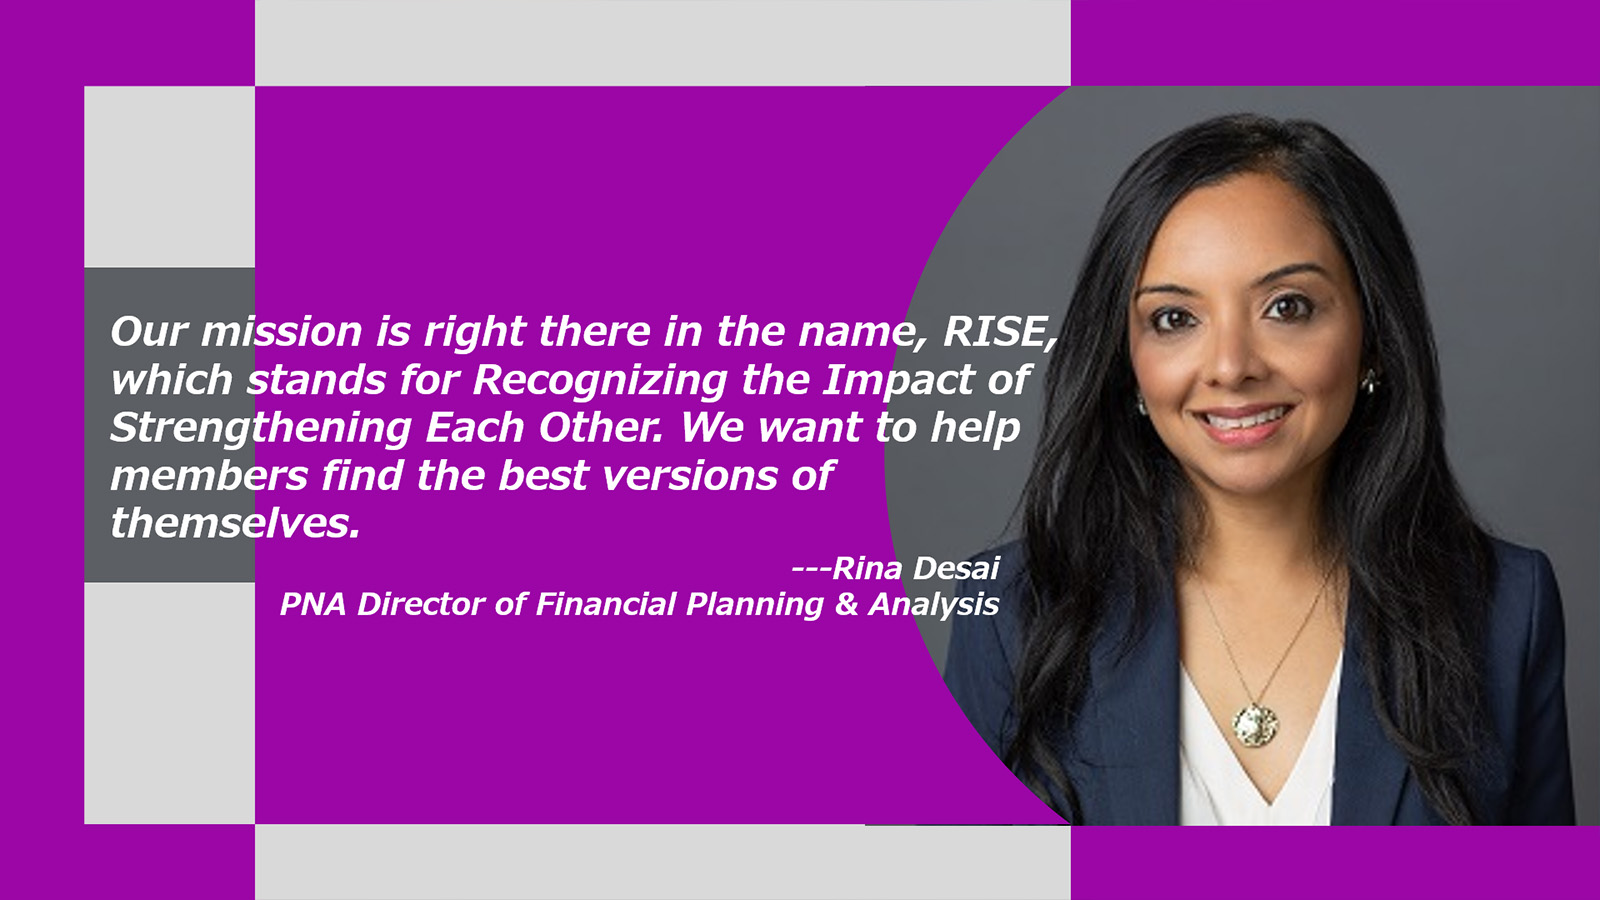 Photo: Rina Desai, PNA Director of Financial Planning & Analysis